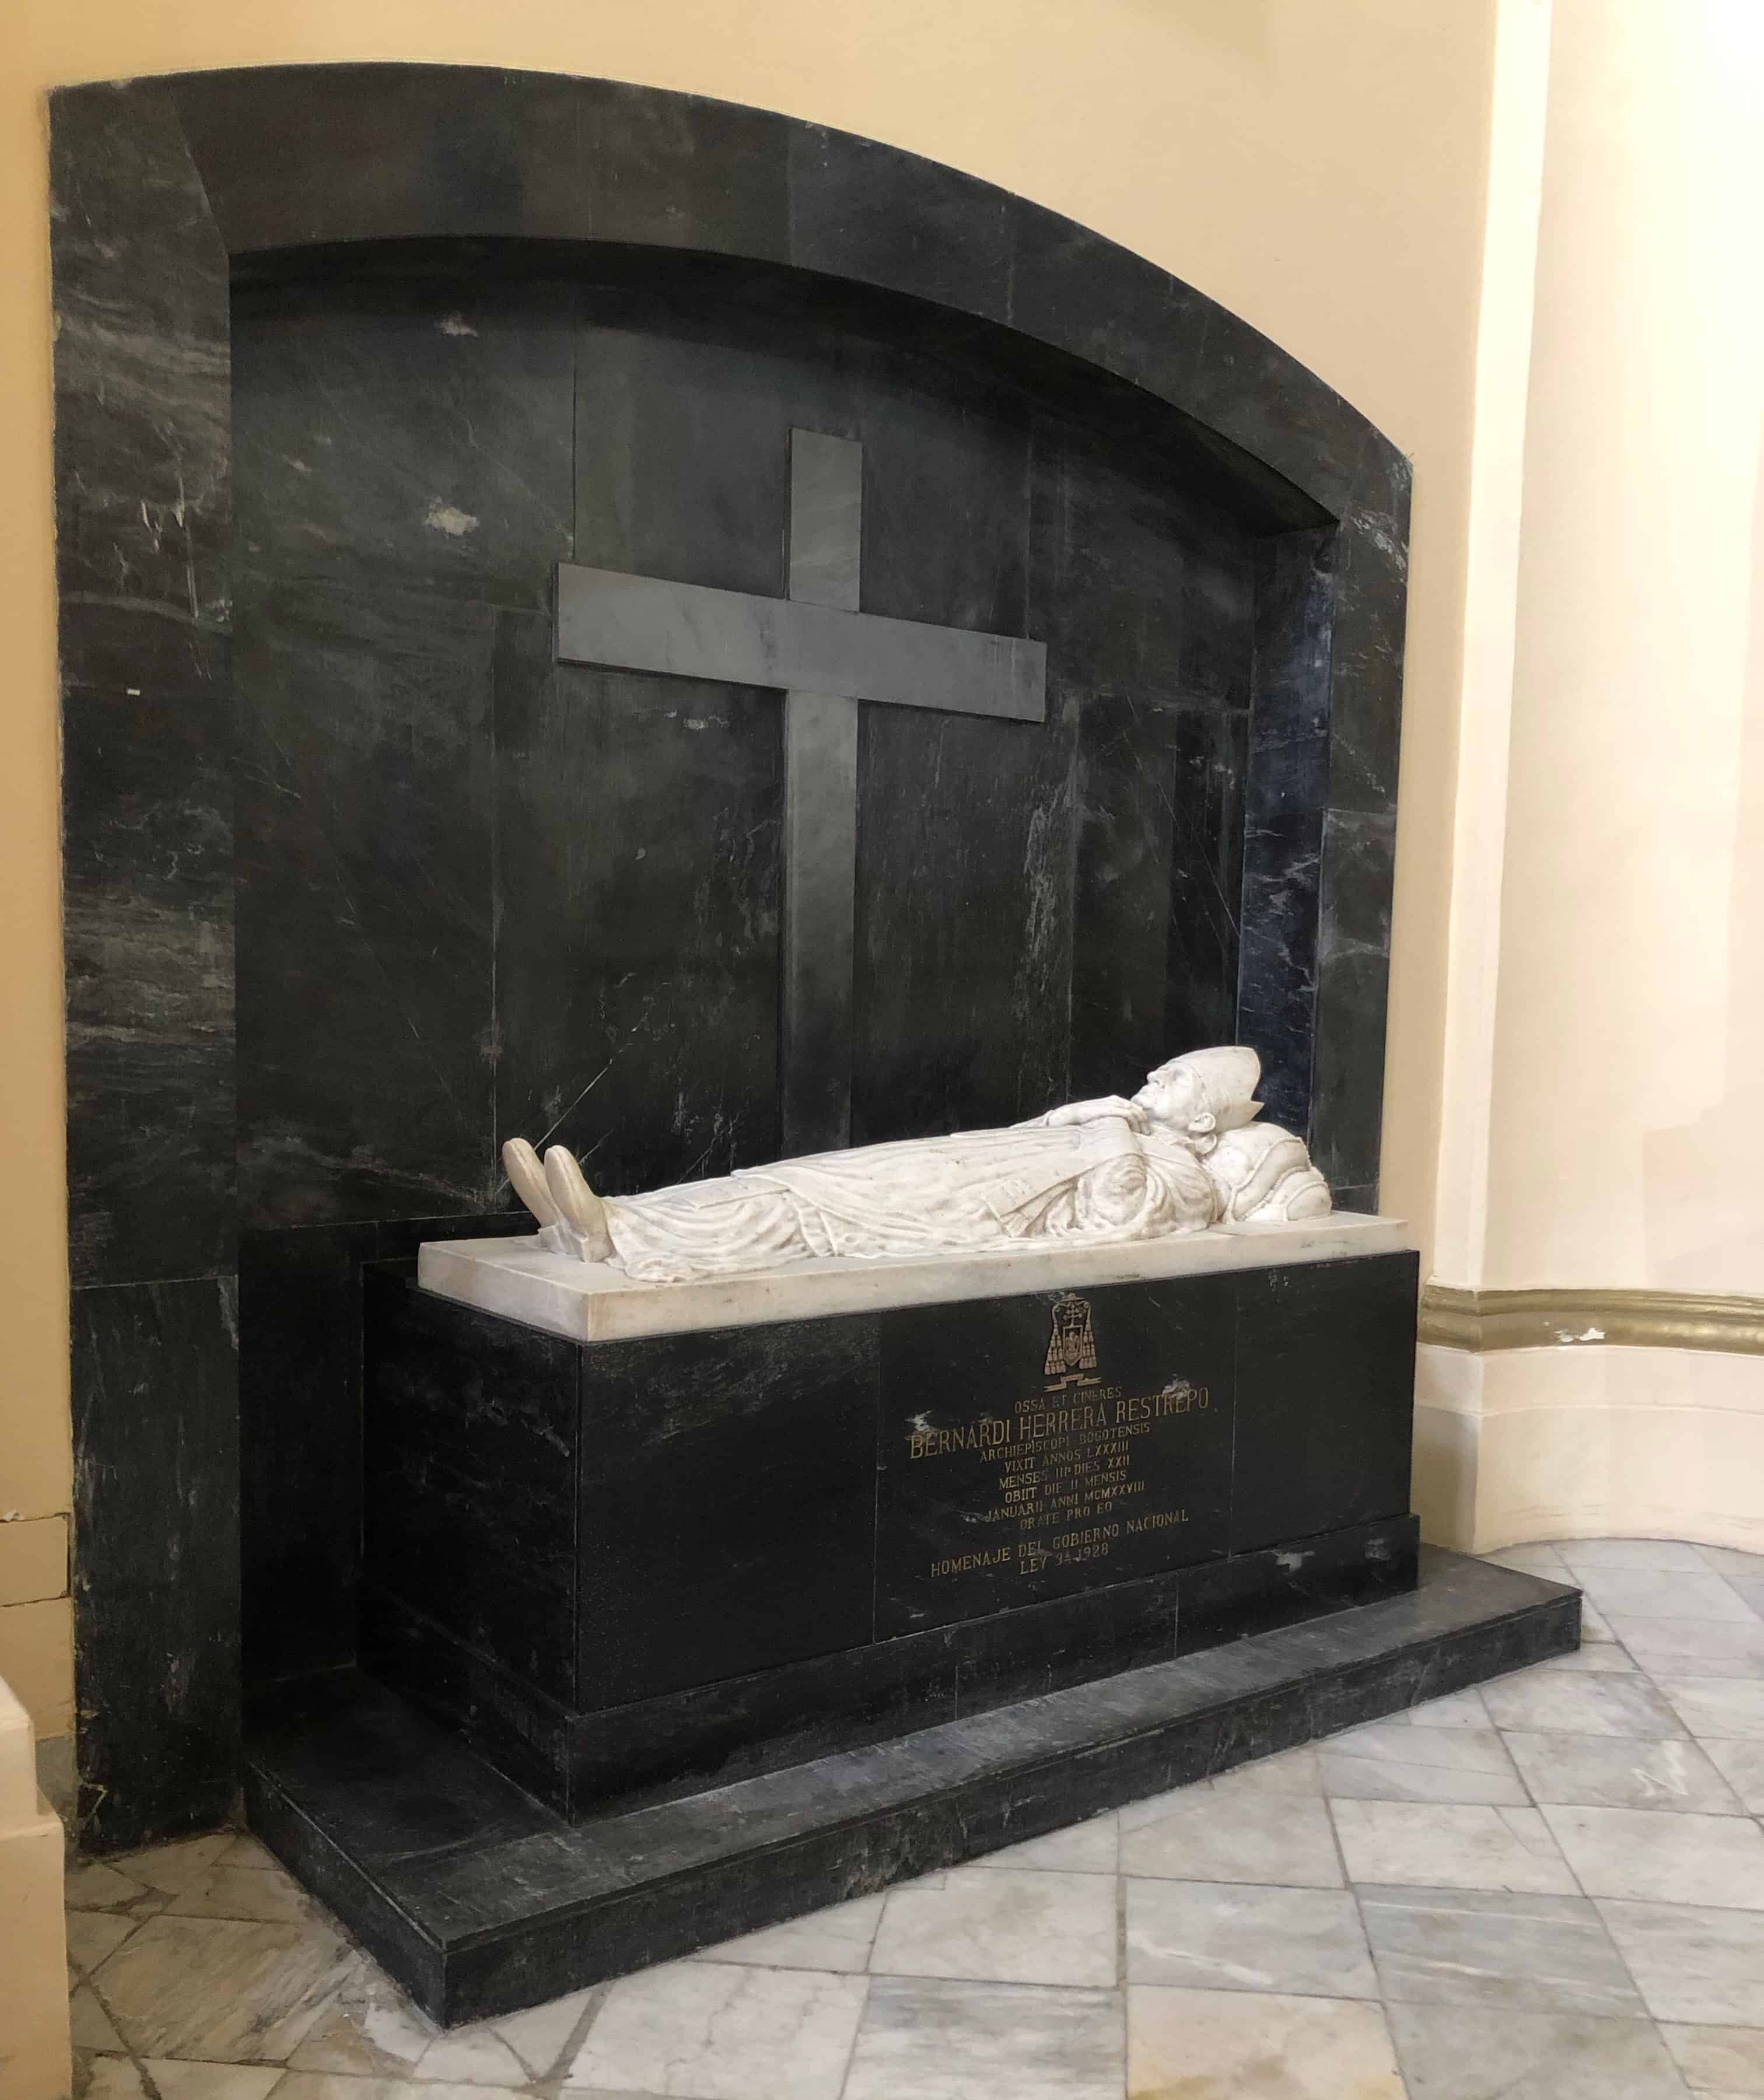 Tomb of Bernardo Herrera Restrepo